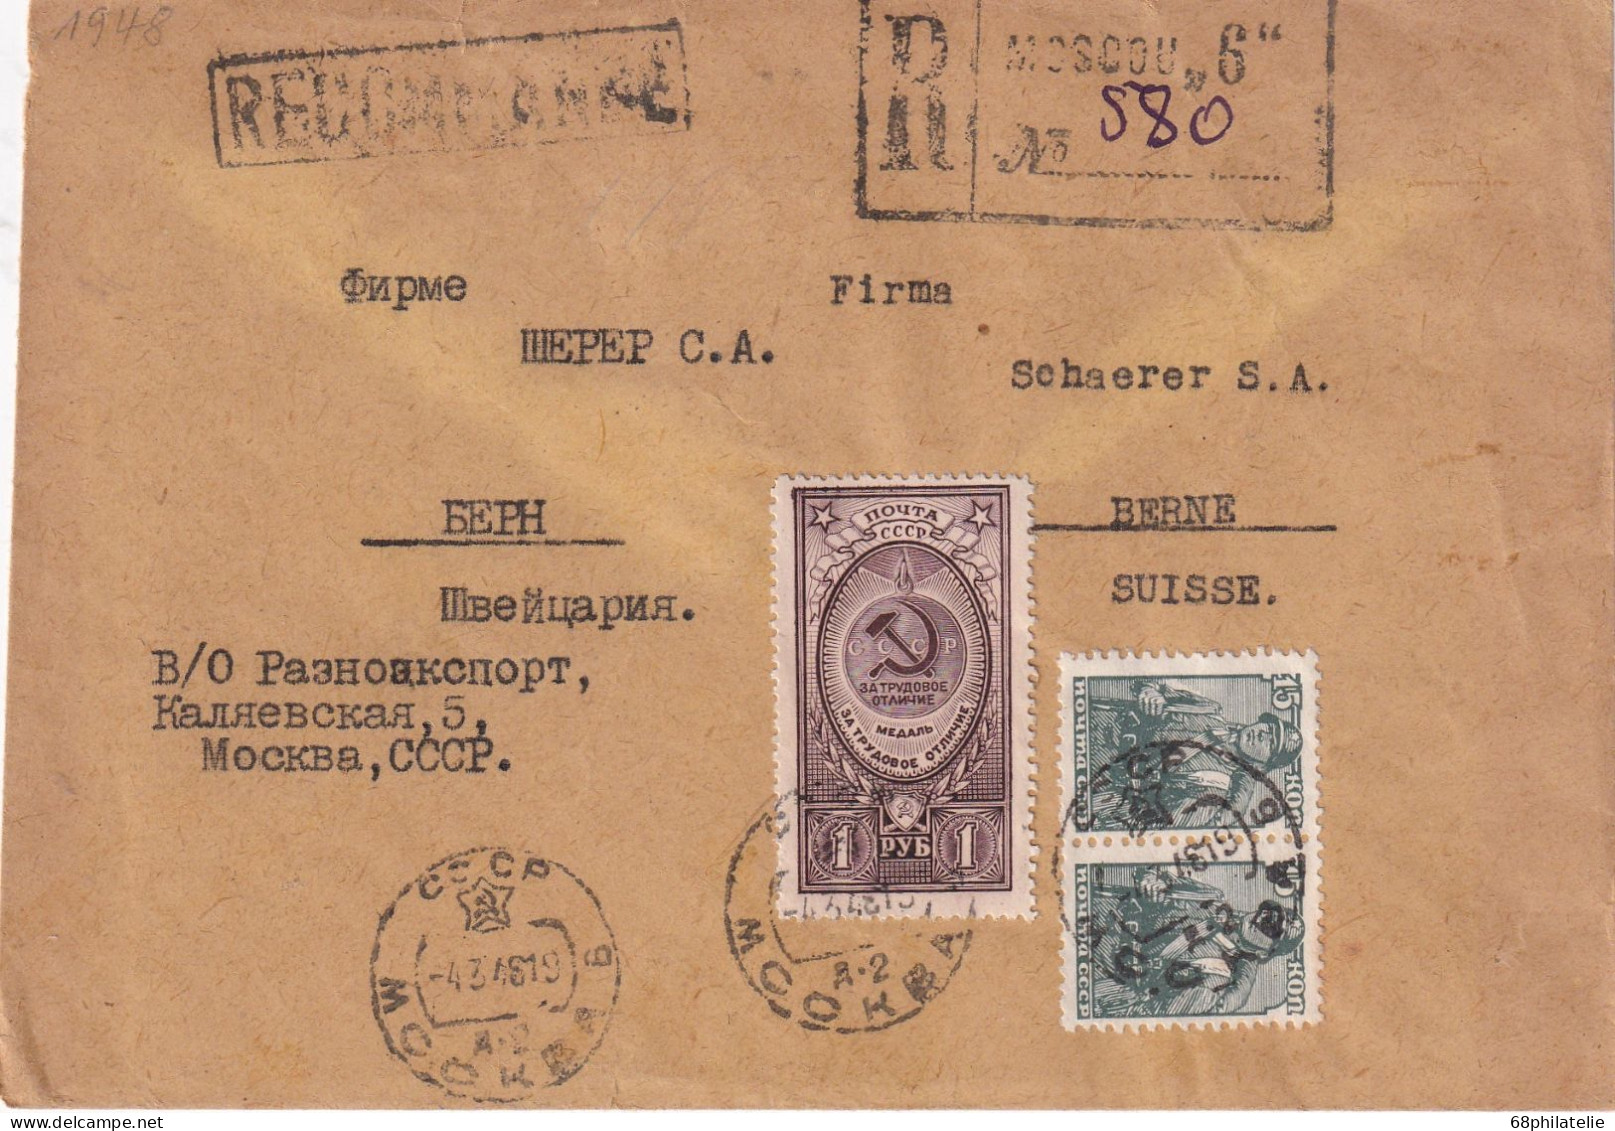 RUSSIE LETTRE RECOMMANDEE DE MOSCOU 1948 - Storia Postale